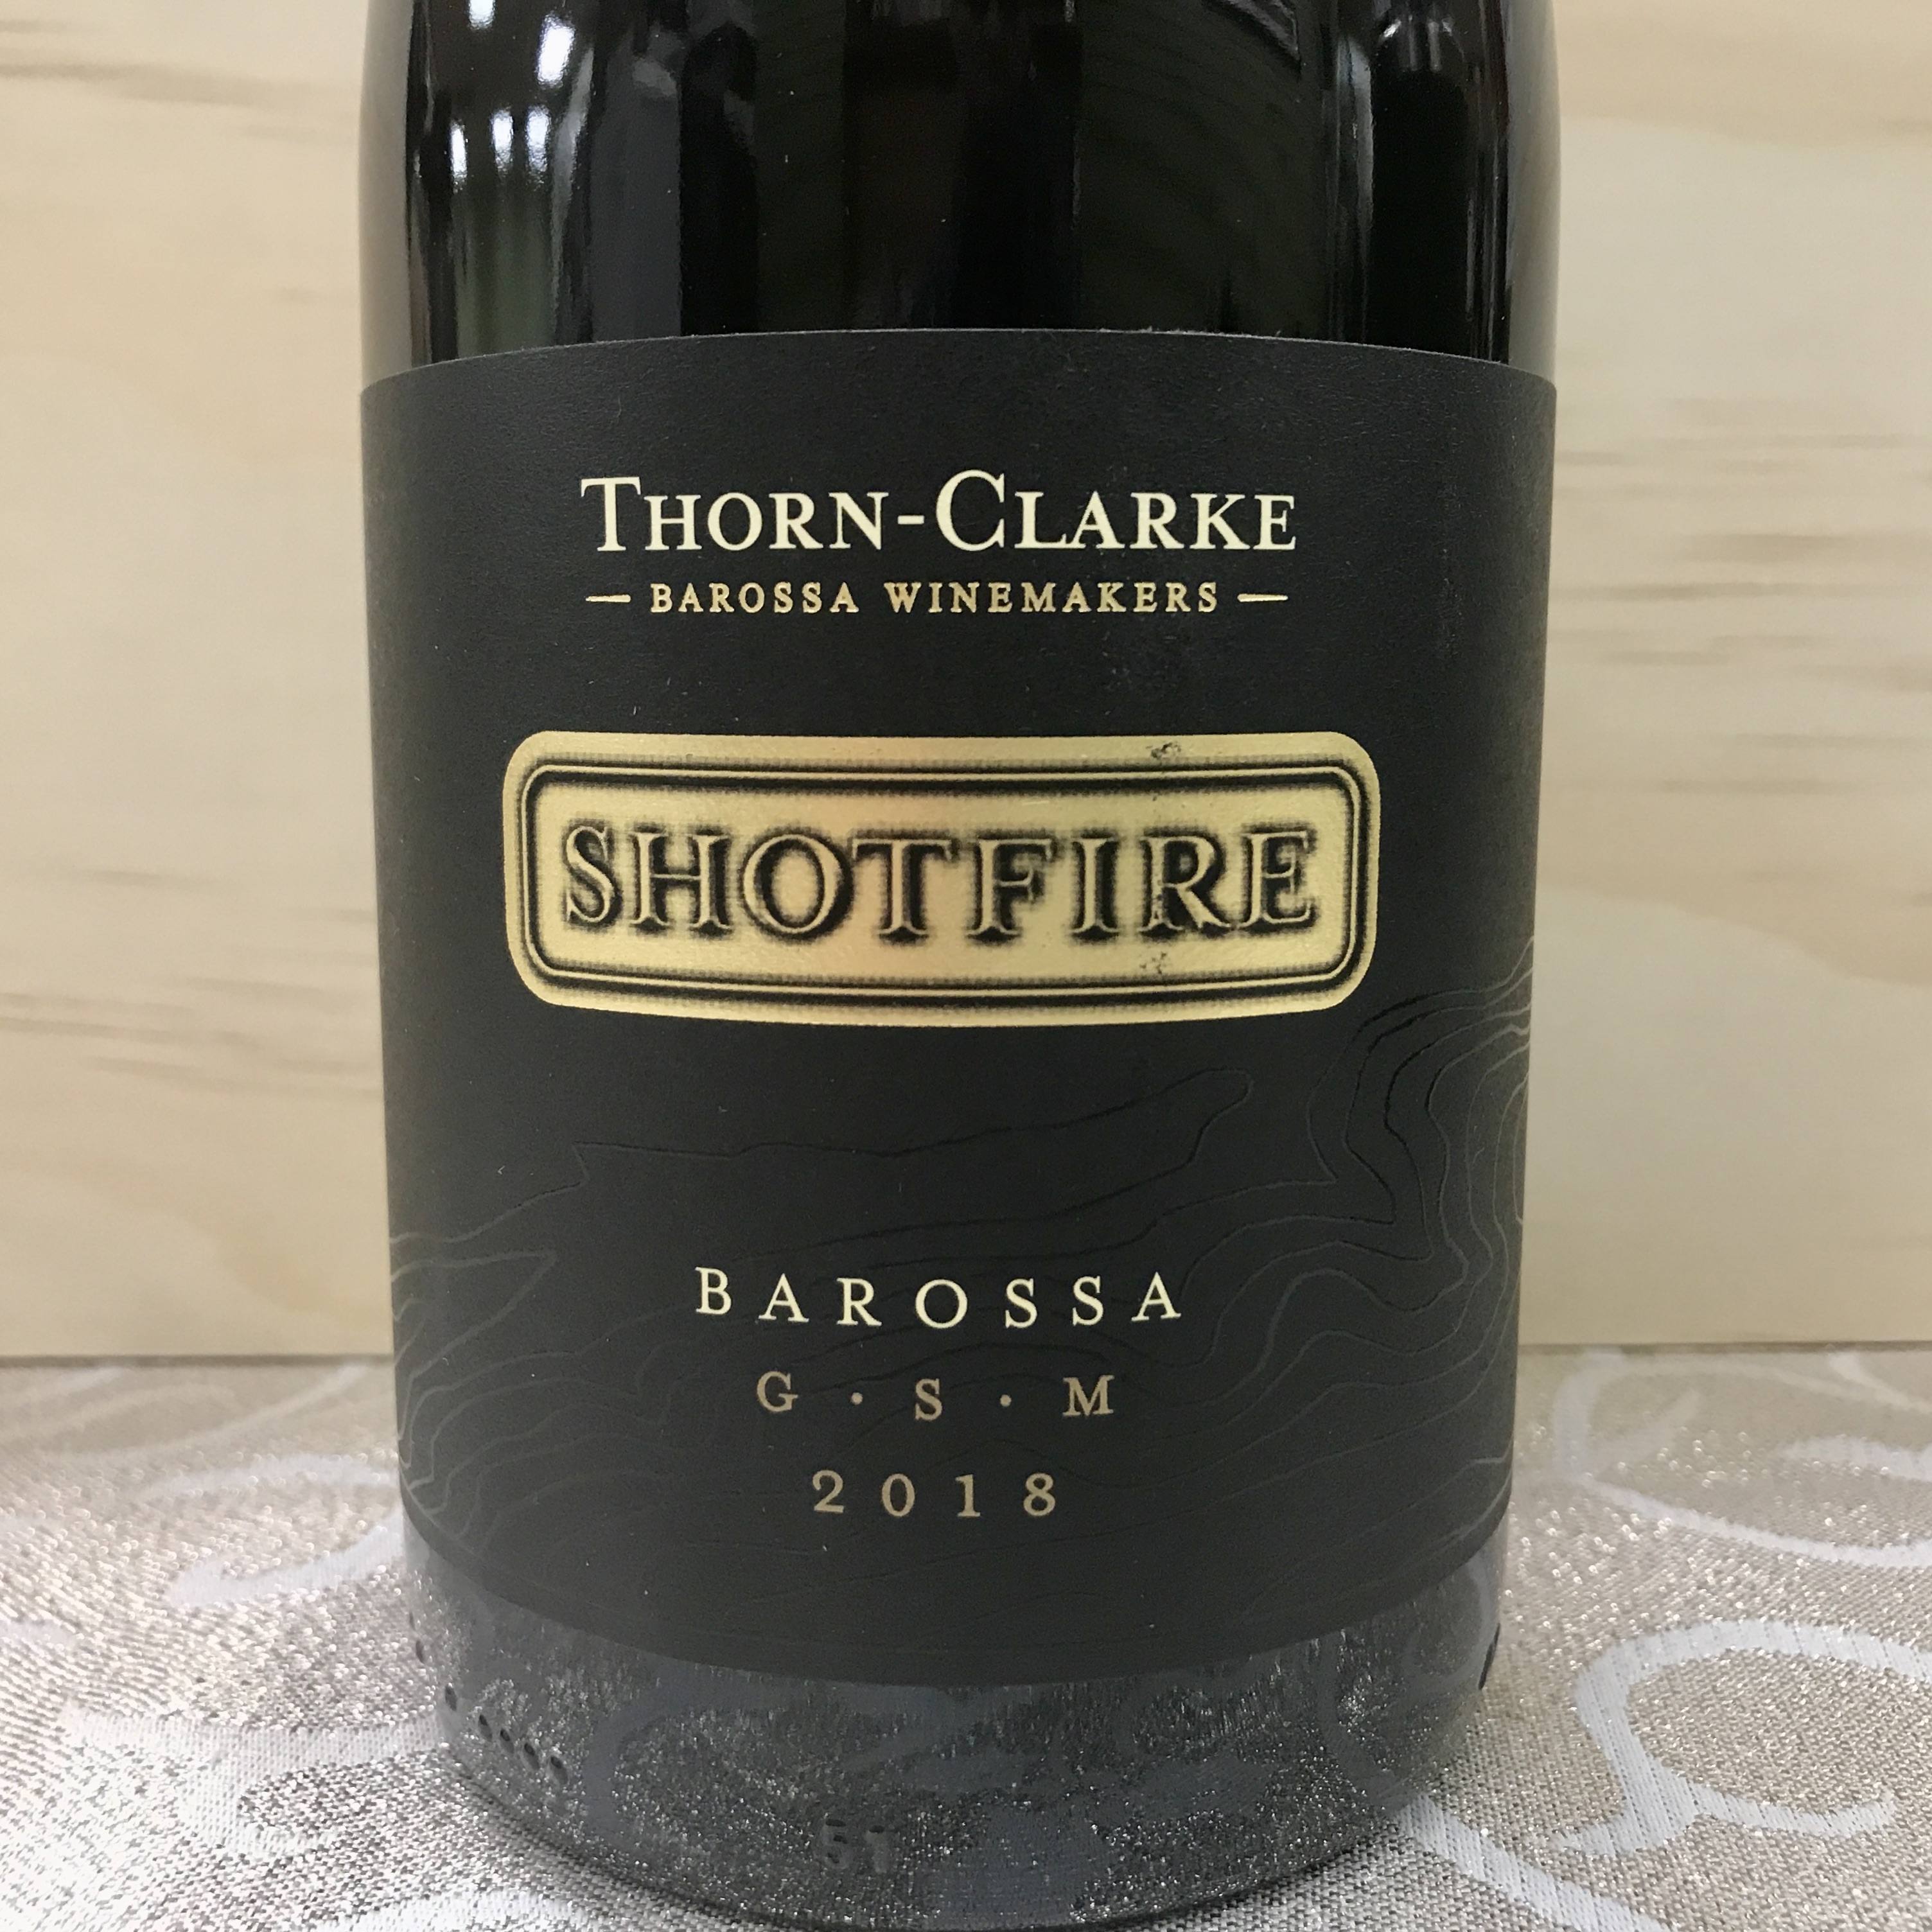 Thorn-Clarke Shotfire Barossa G S M 2020